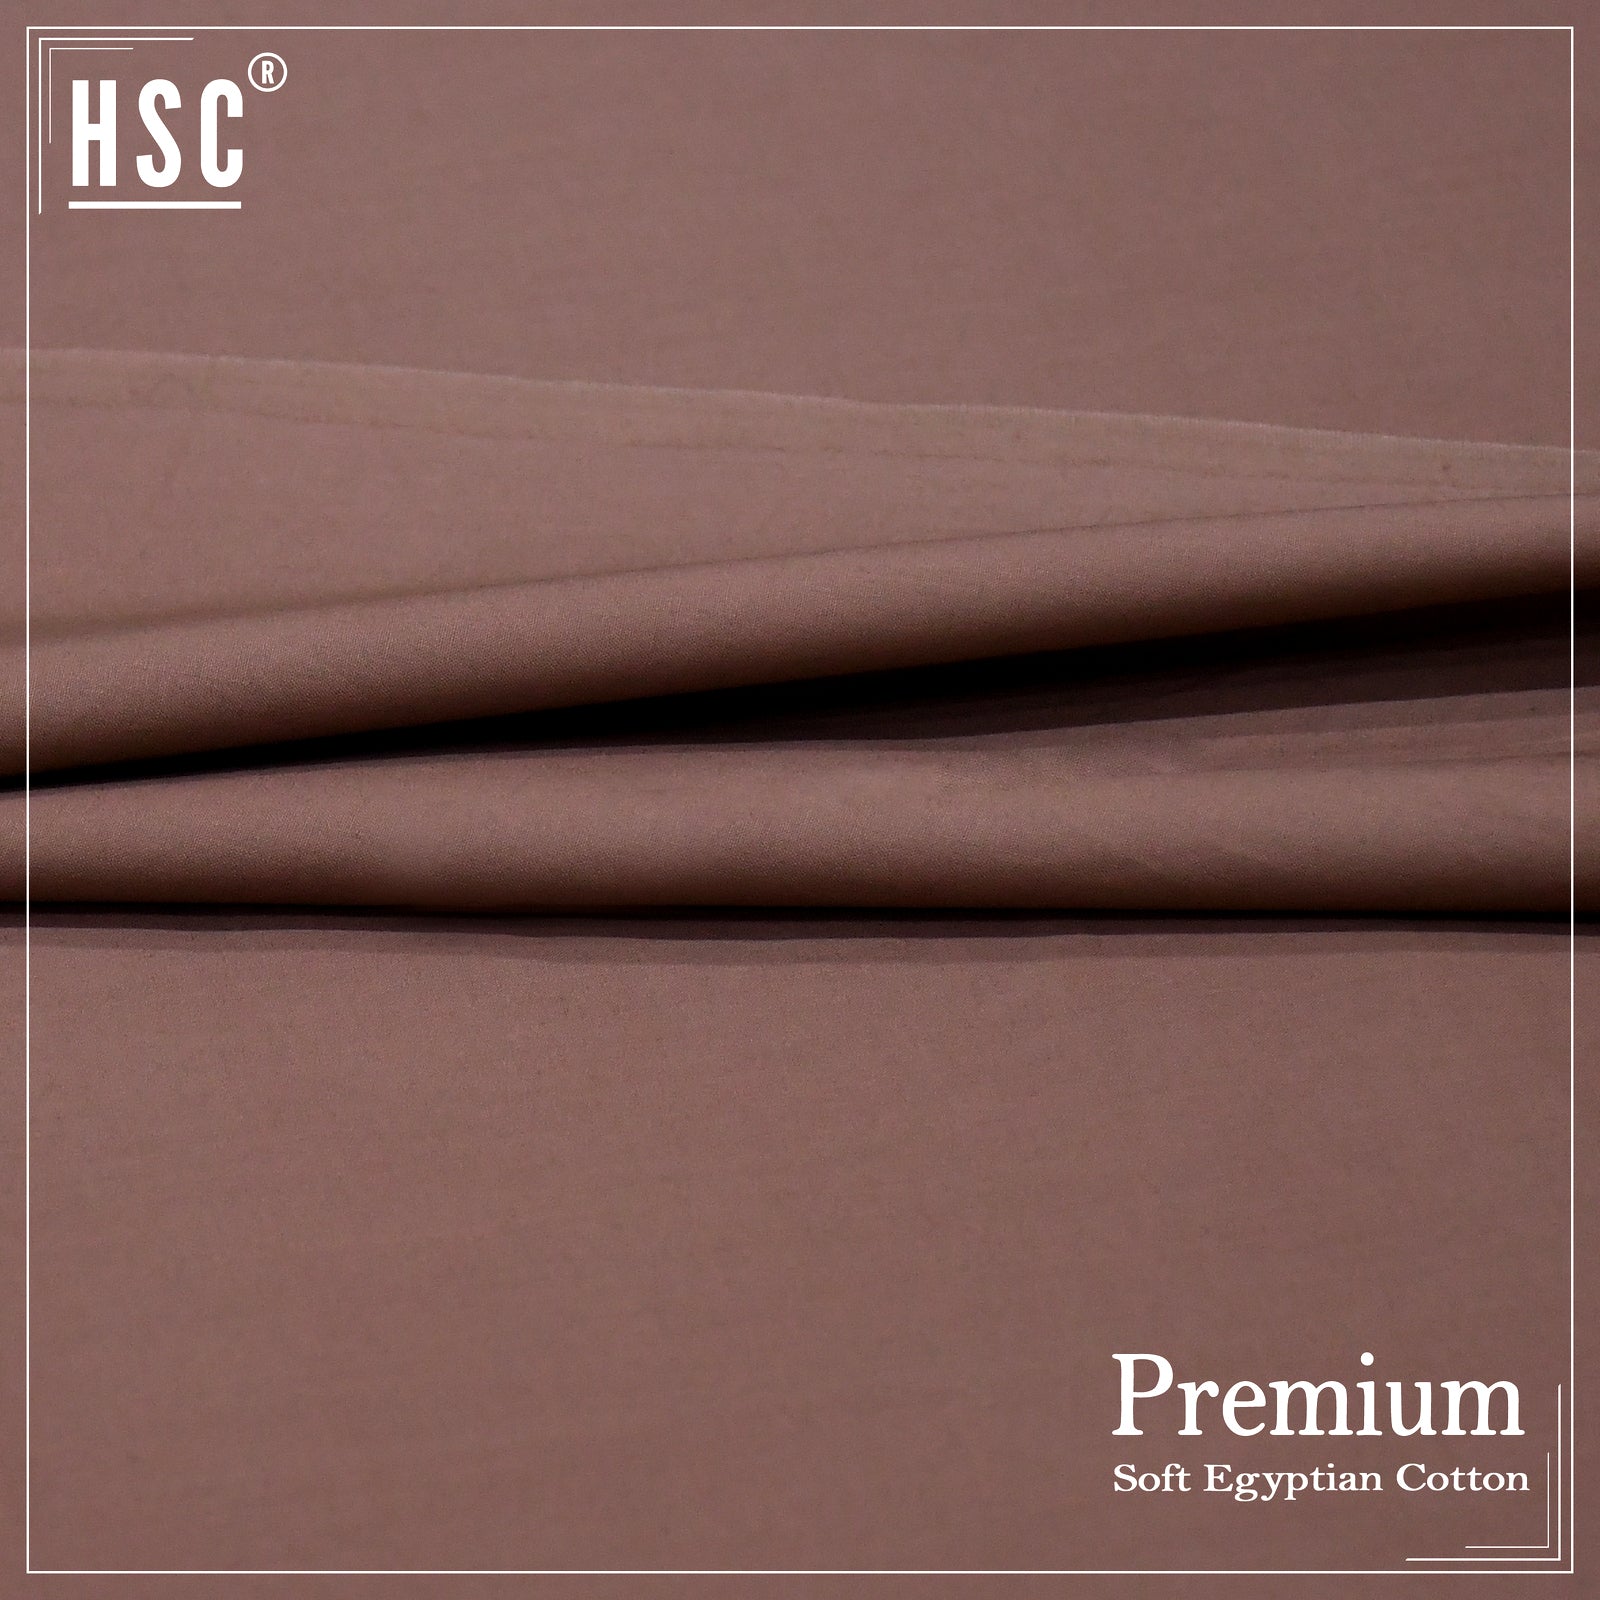 Premium Soft Egyptian Cotton - SCT3 HSC